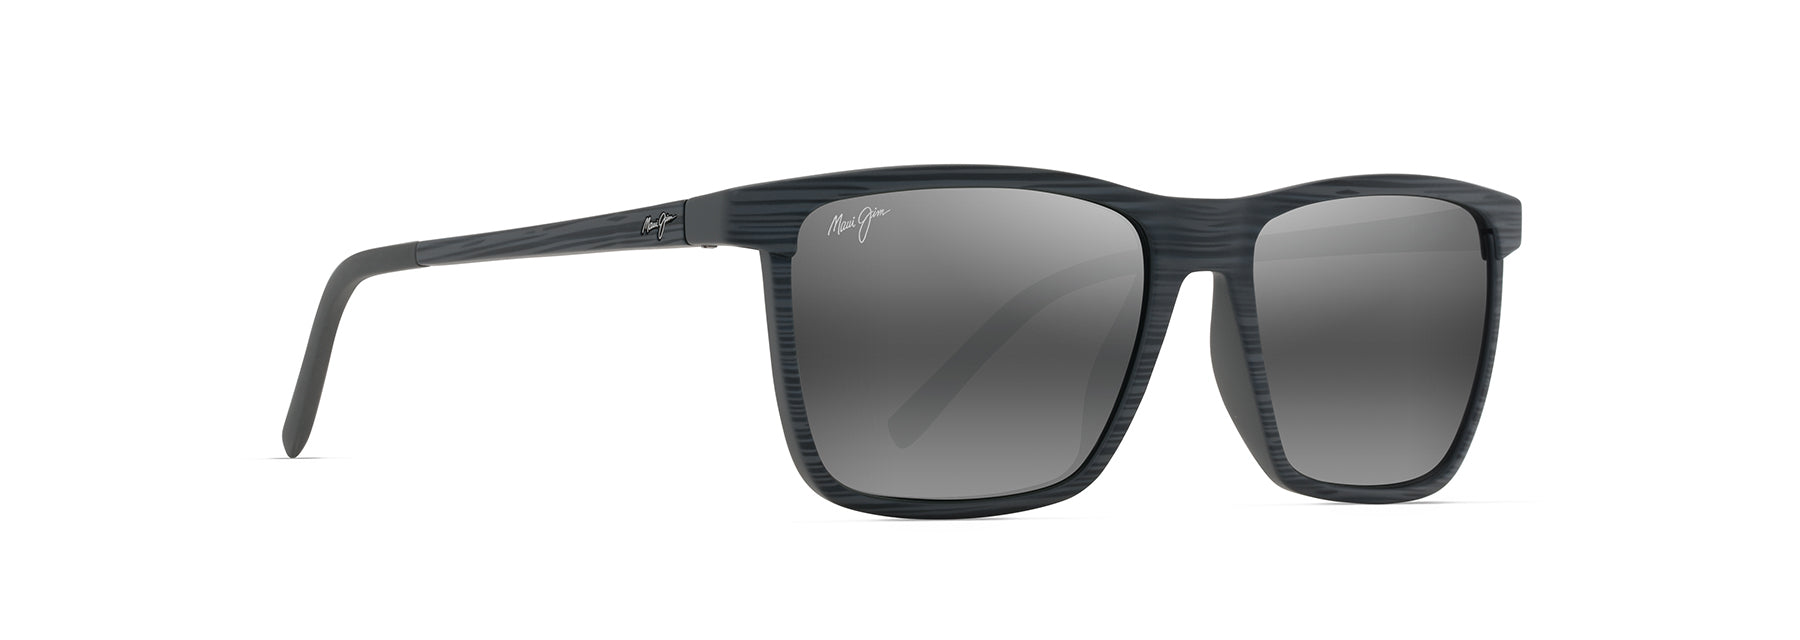 American Jim Way Maui Sunglass One – Sunglasses